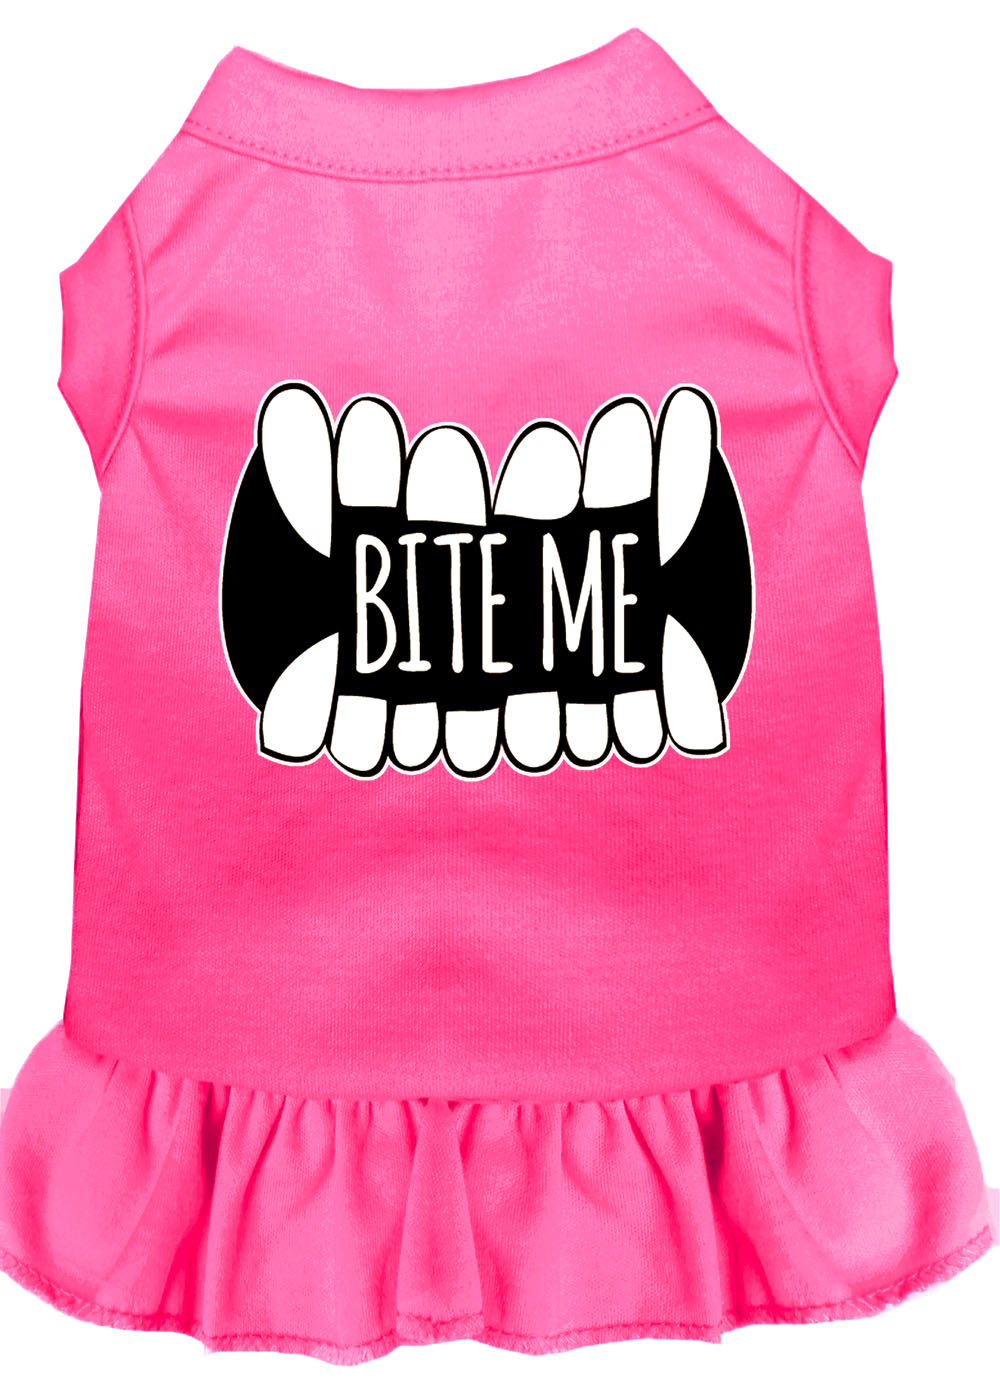 Bite Me Screen Print Dog Dress Bright Pink Lg